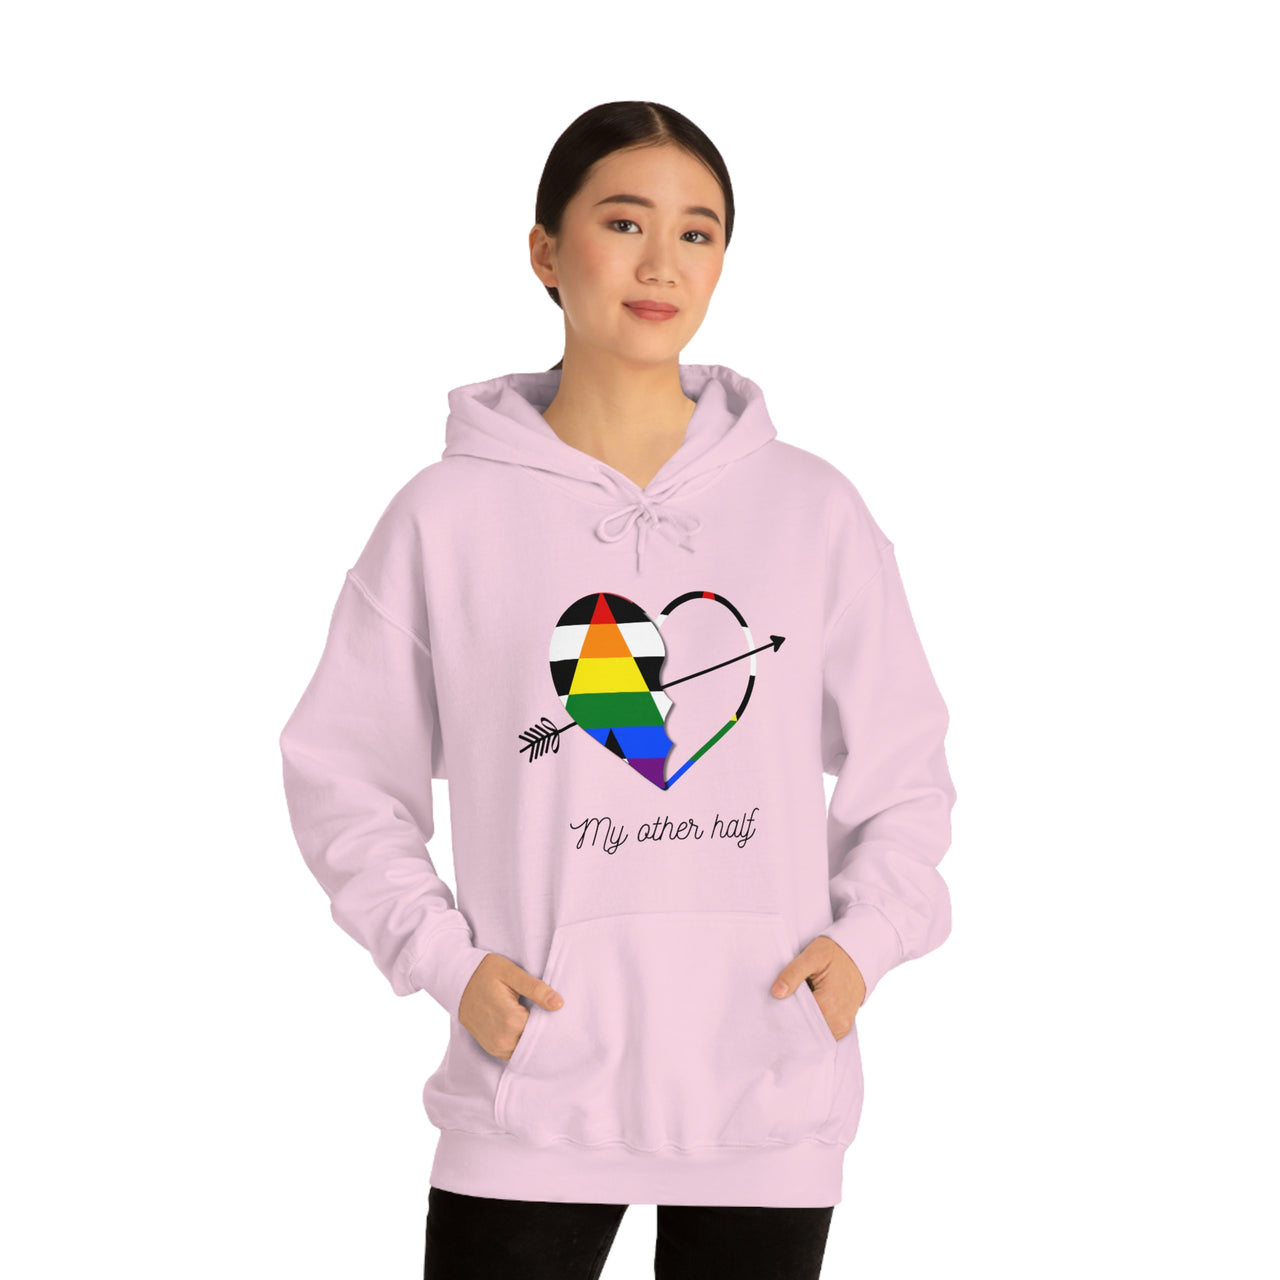 Straight Ally Flag LGBTQ Affirmation Hoodie Unisex Size - The Other Half Printify